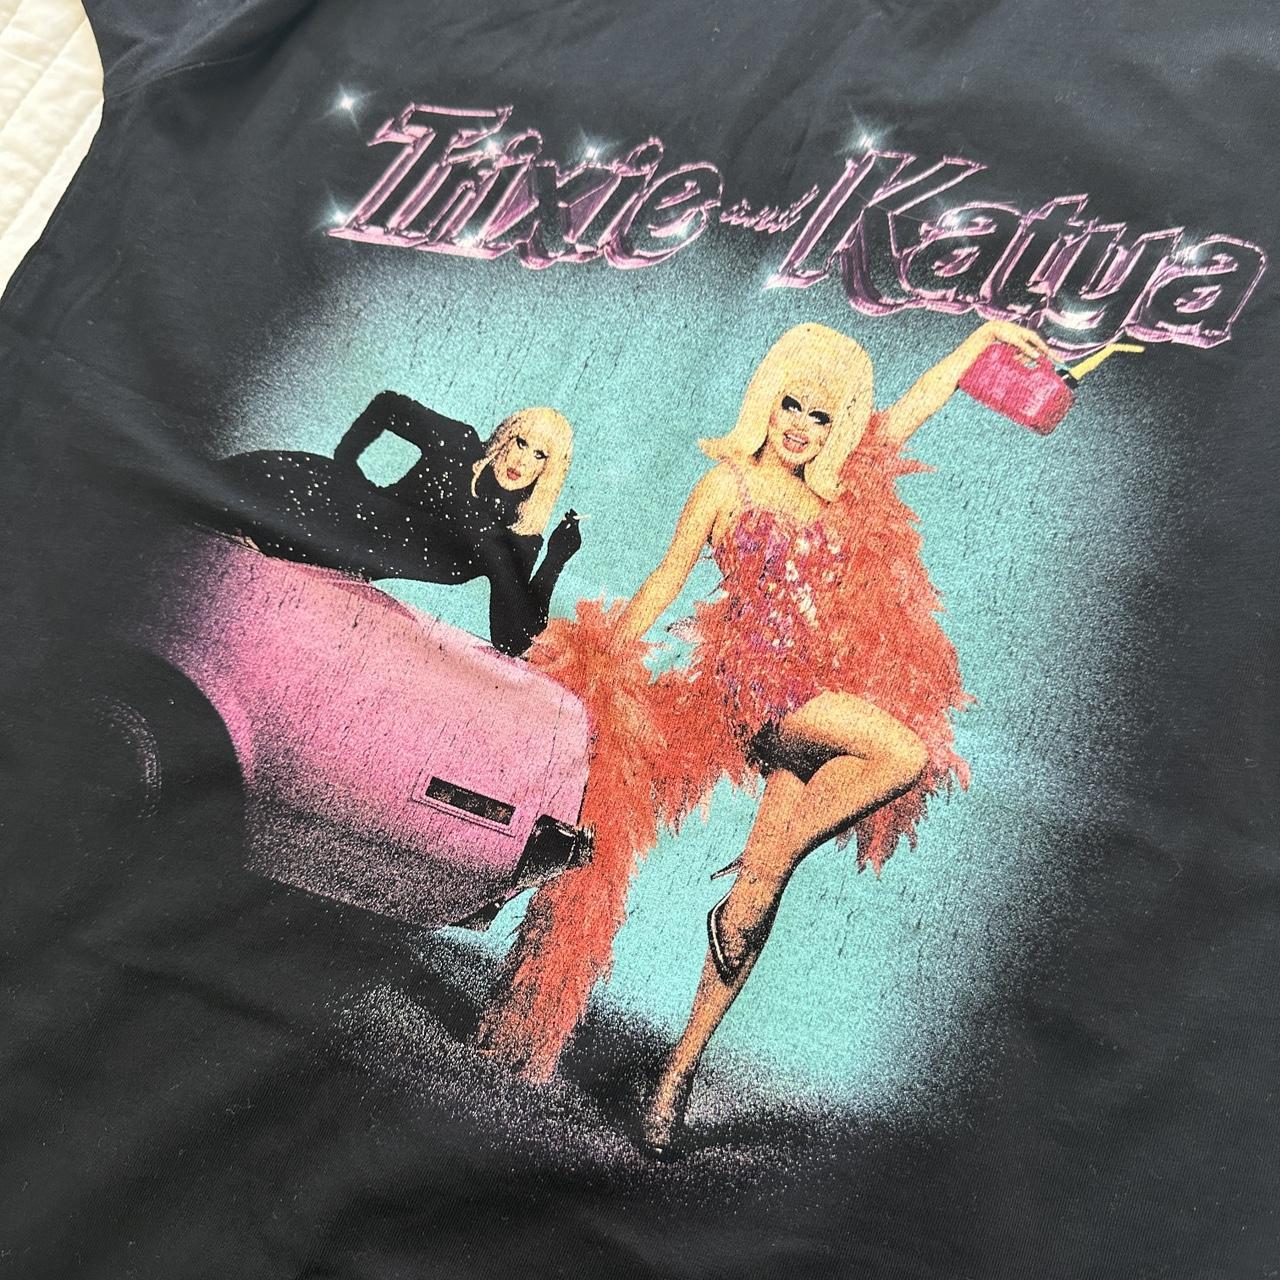 Trixie & Katya Aus/nz tour 2022 shirt Size S, brand... - Depop